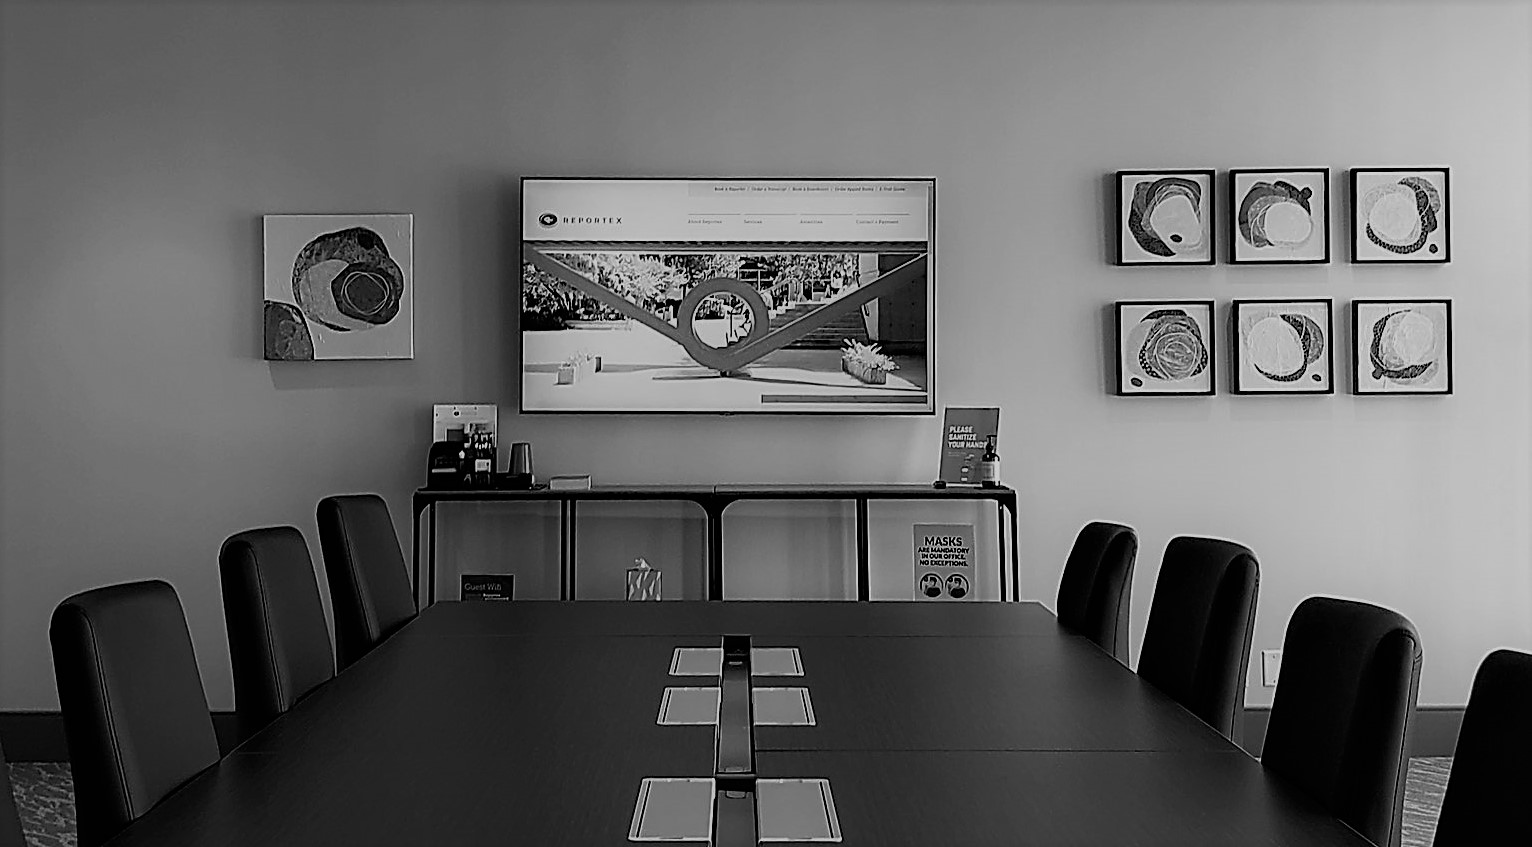 image of meeting room